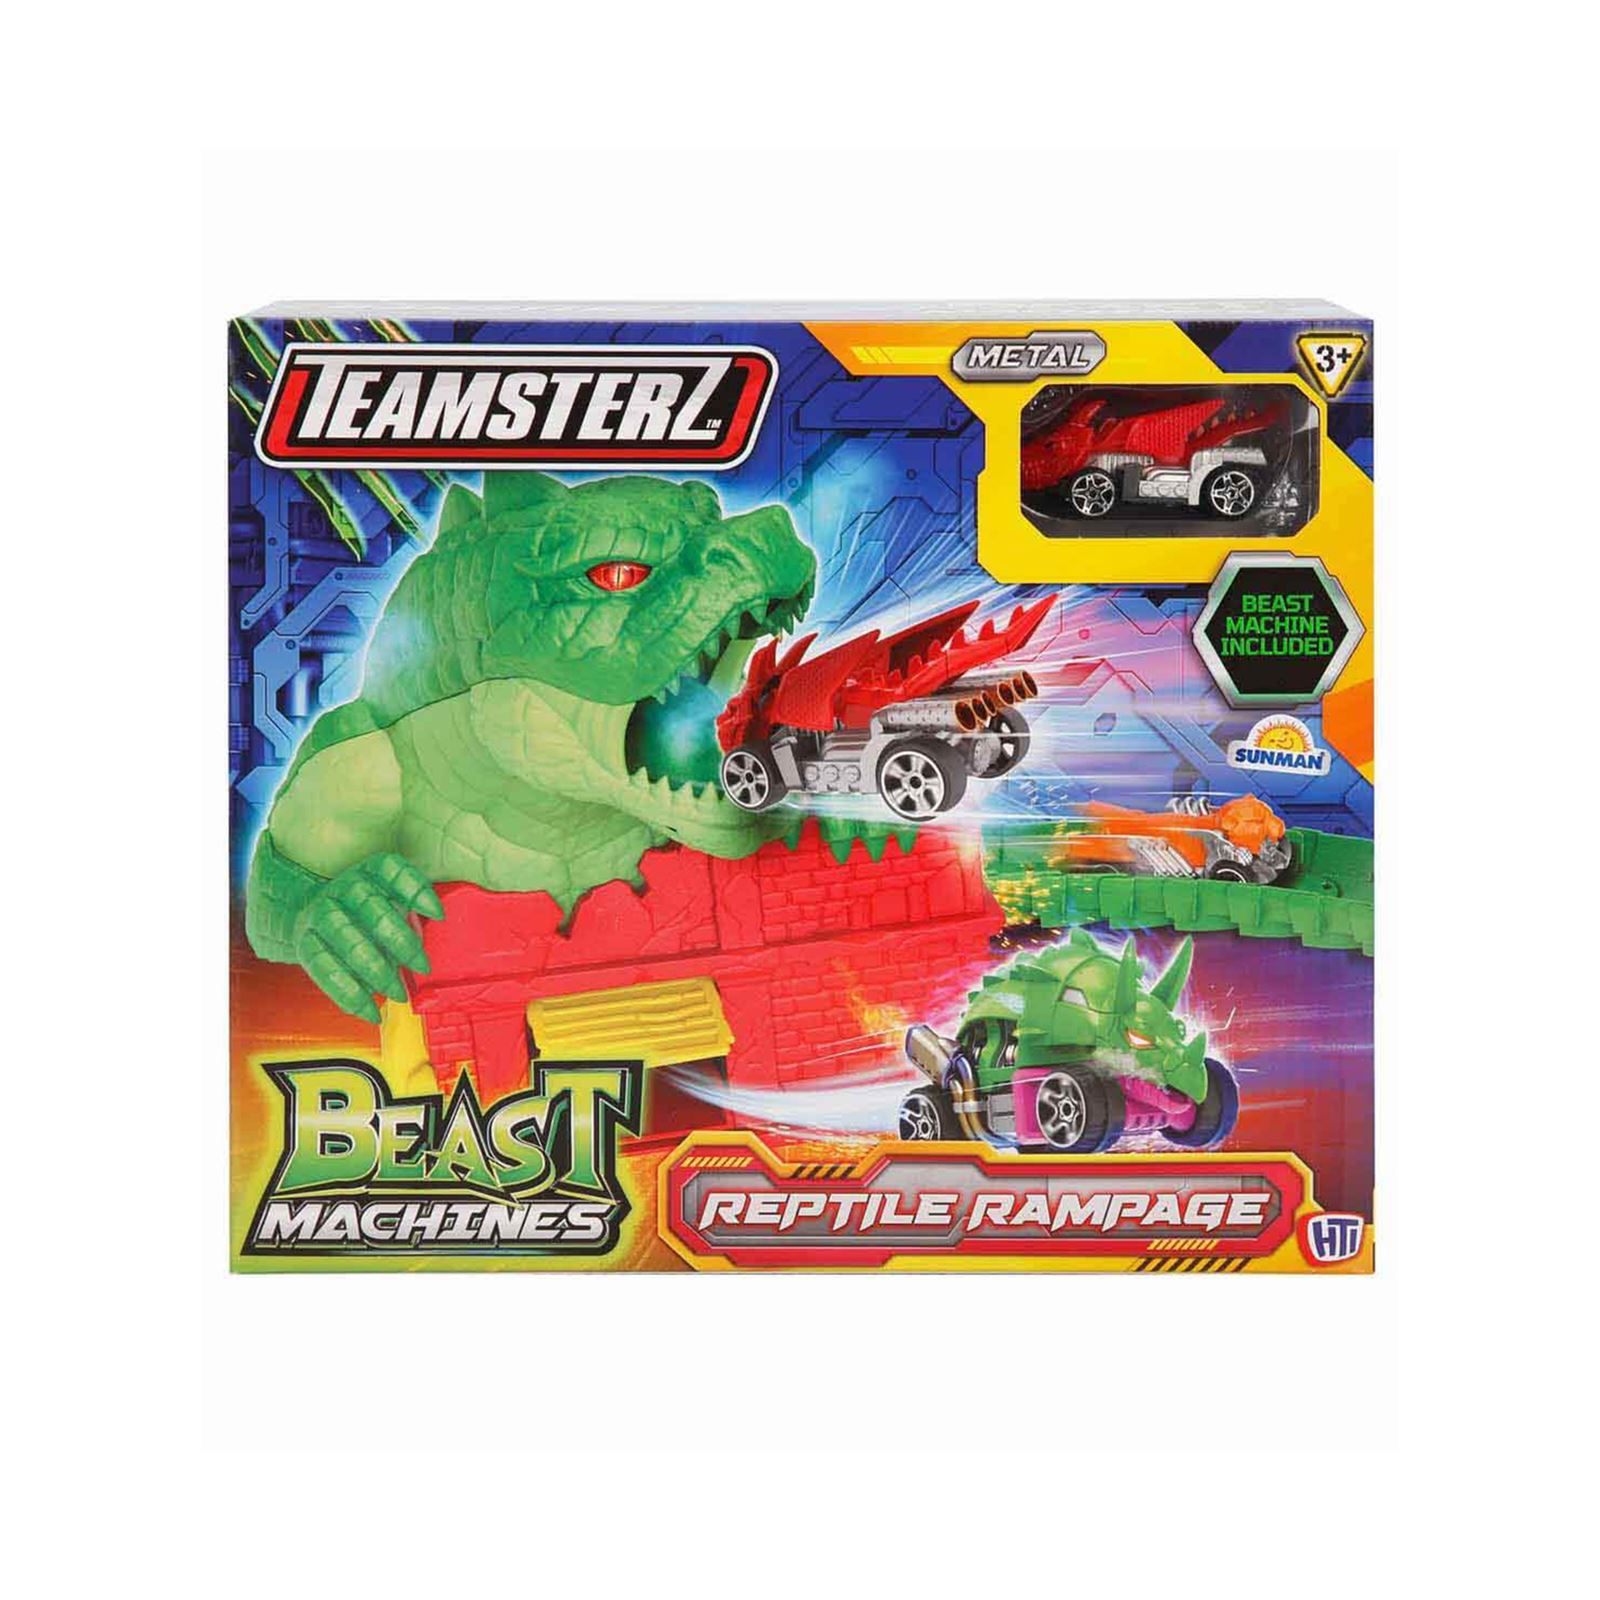 Teamsterz Reptile Rampage Oyun Seti Renkli